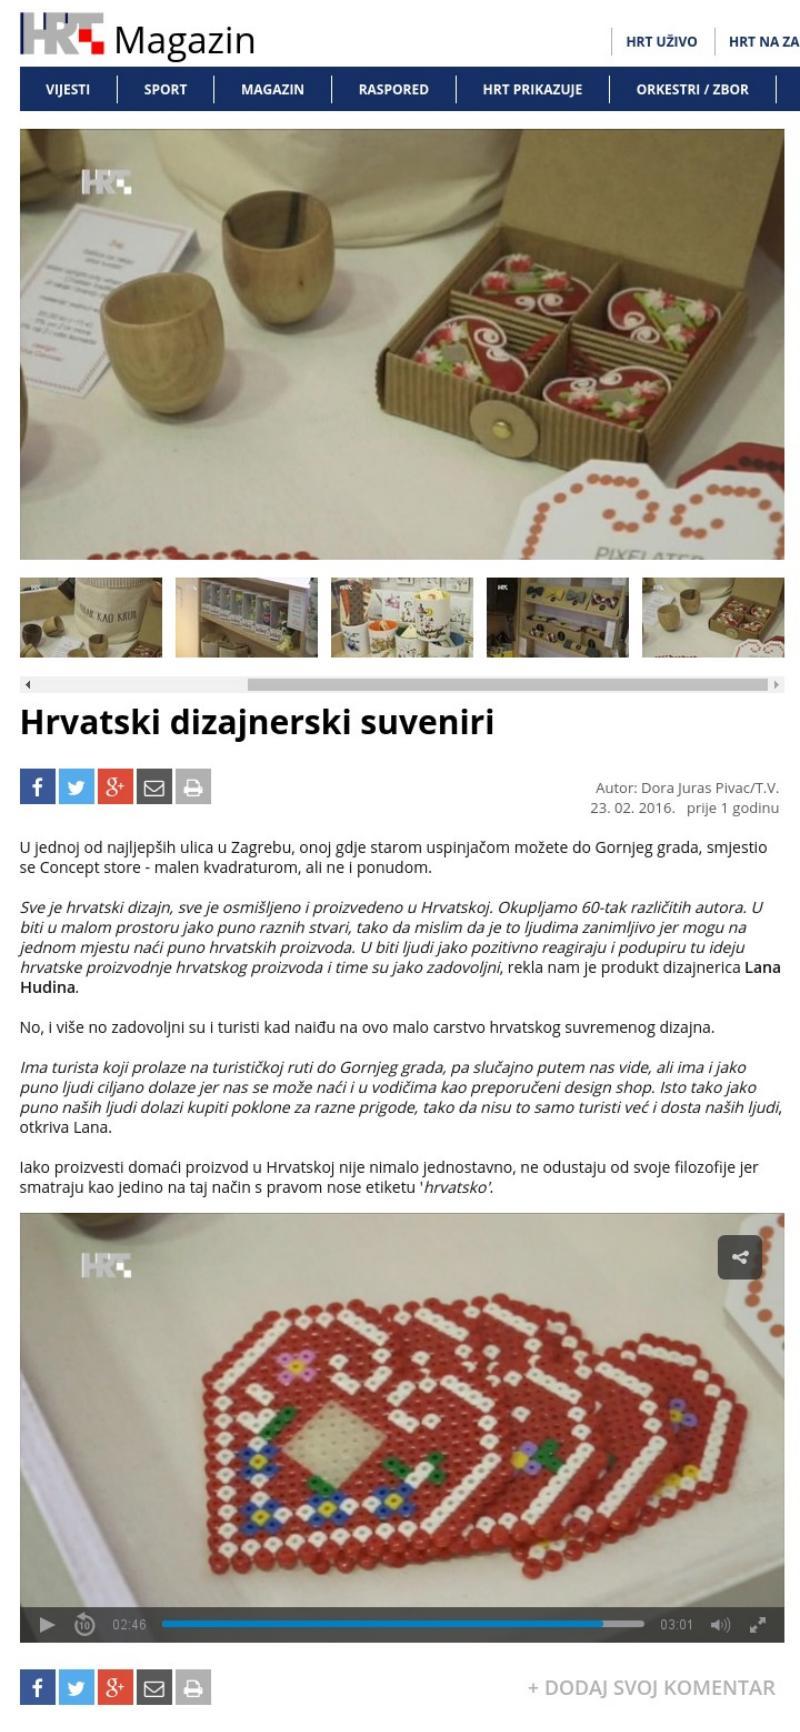 HRT magazin - hrvatski dizajnerski suveniri